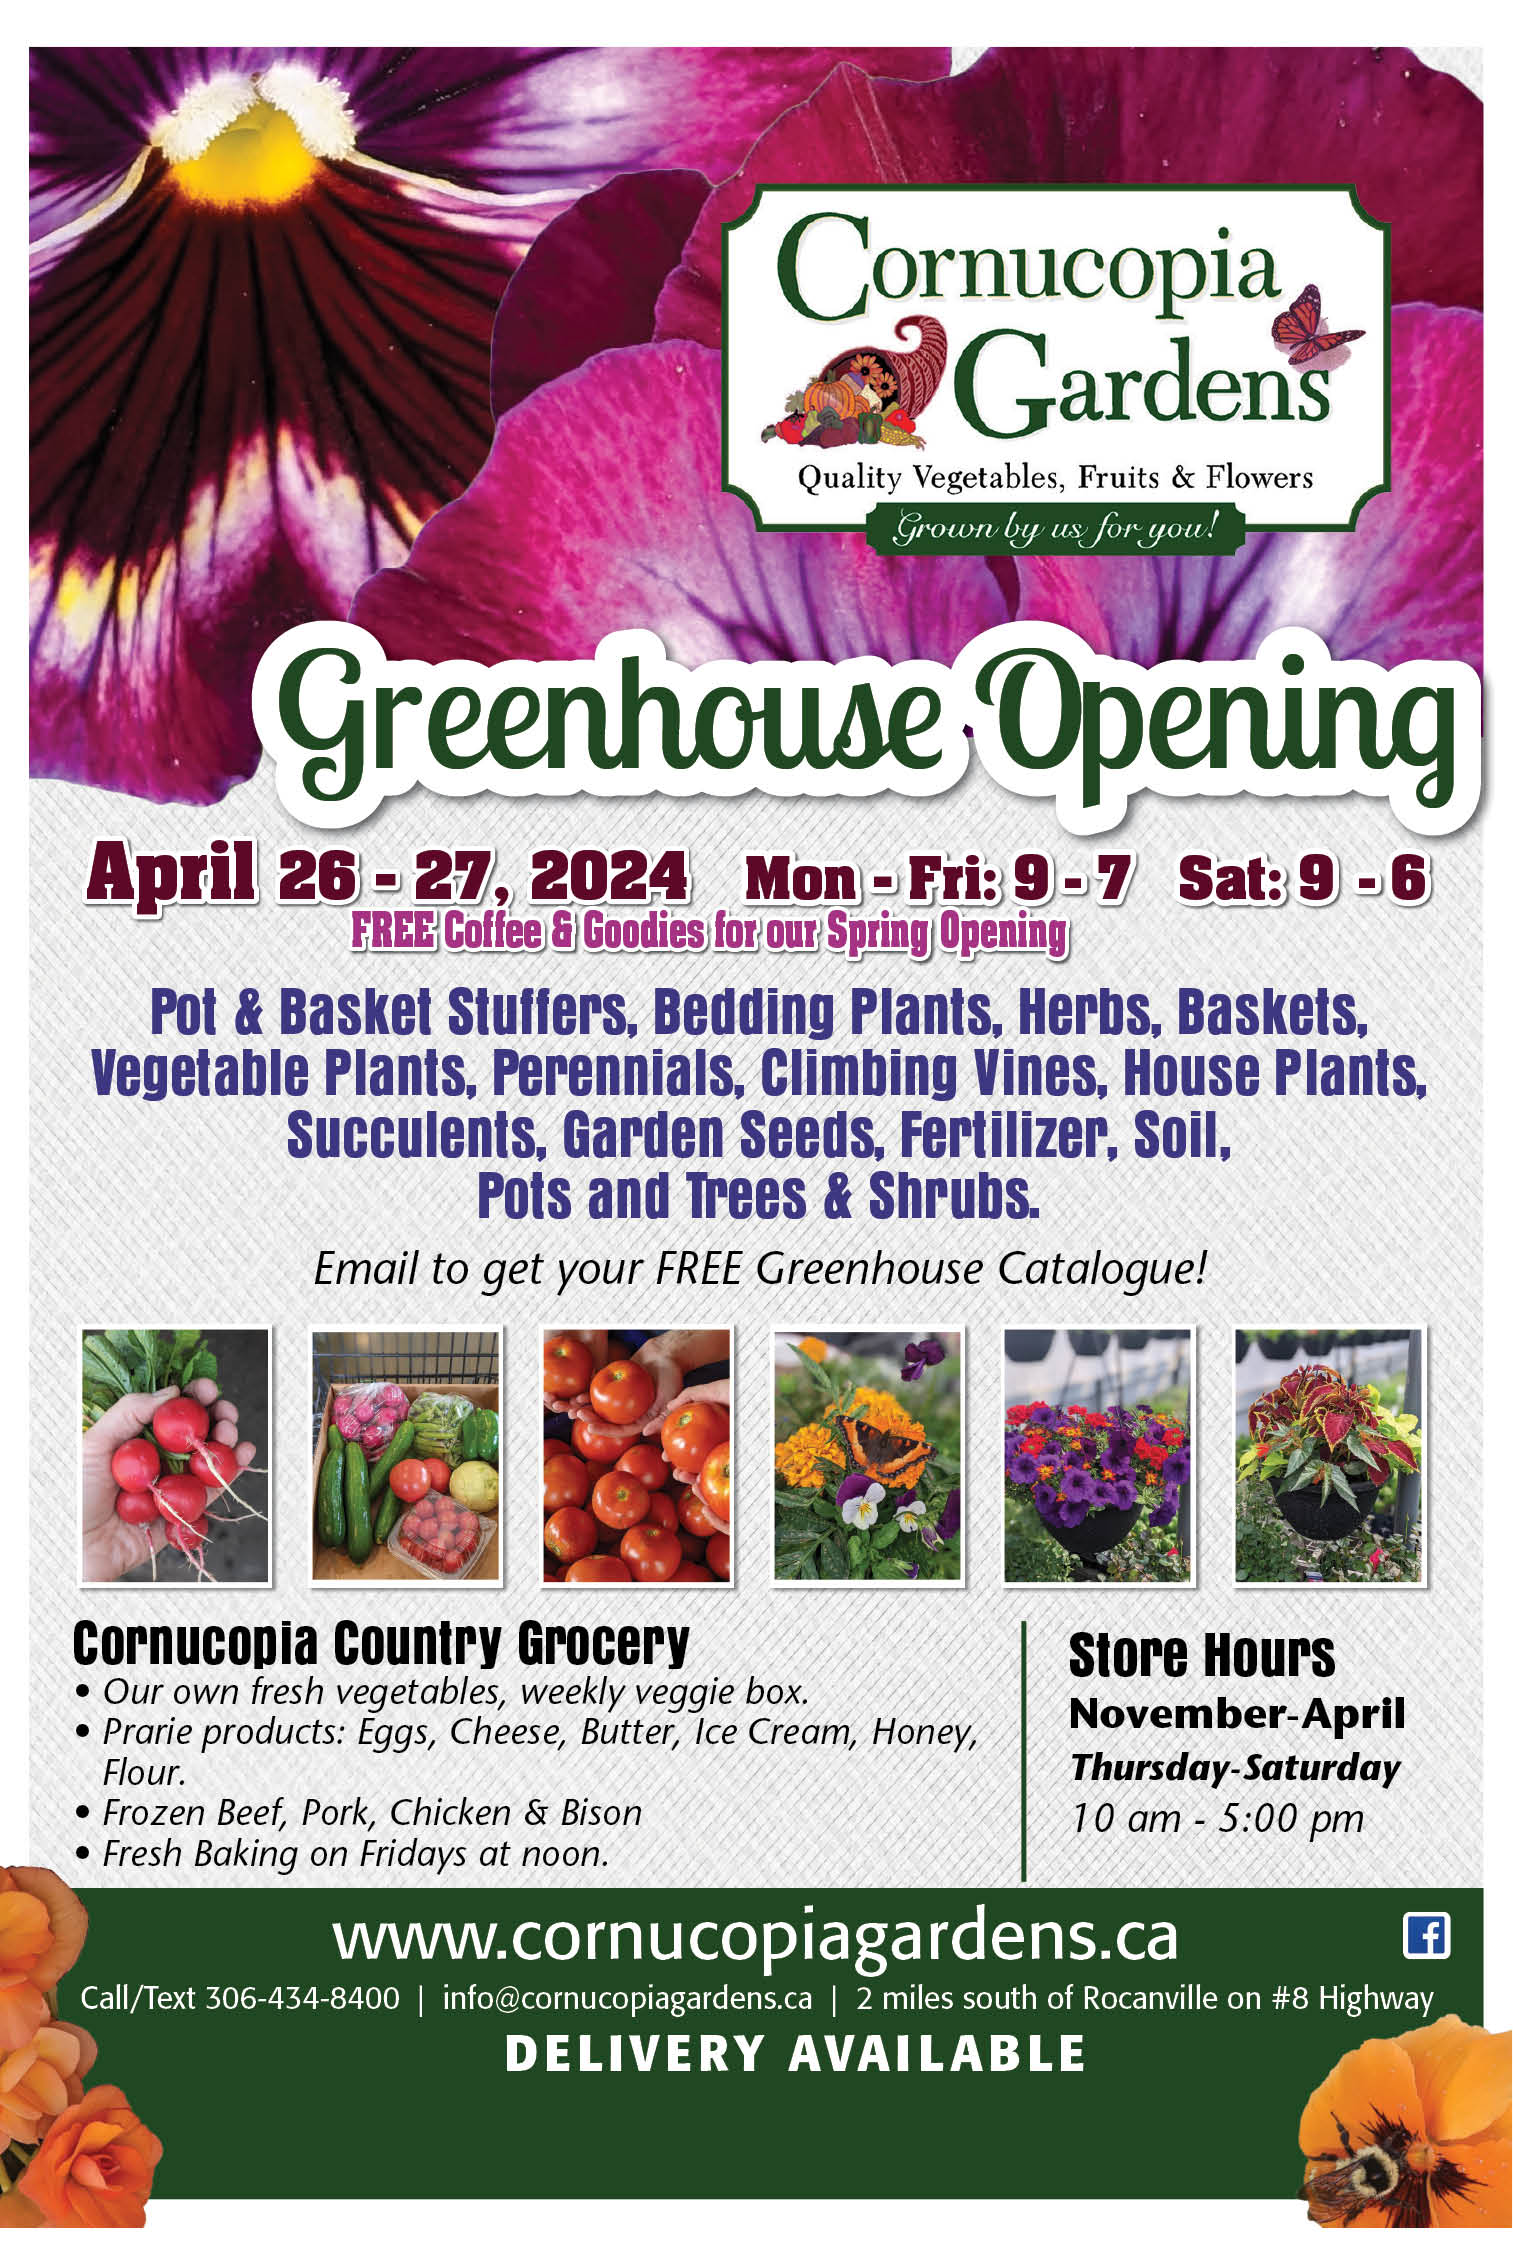 Cornucopia Gardens Spring Opening